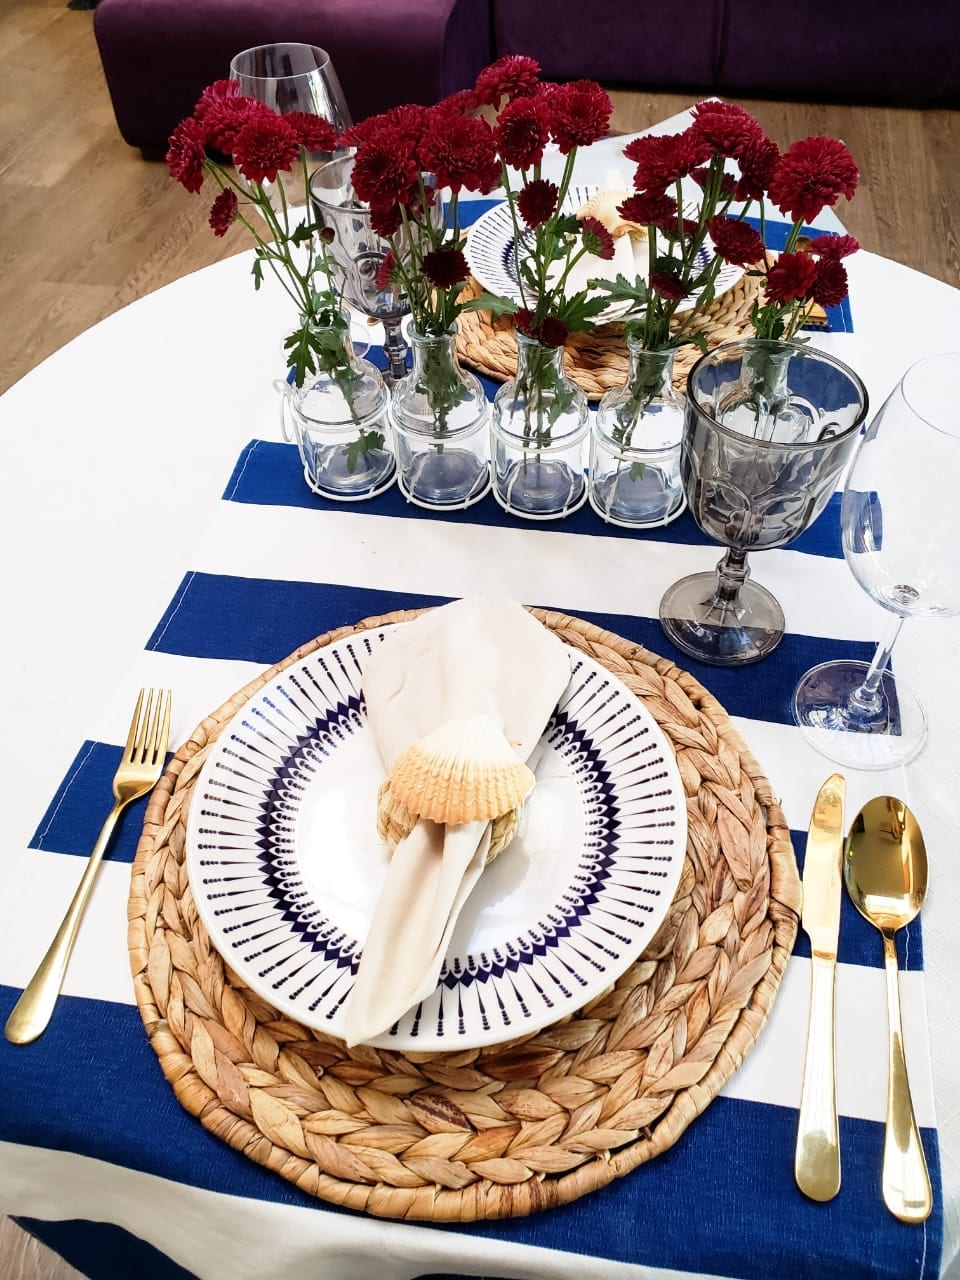 jantar romantico mesa posta navy